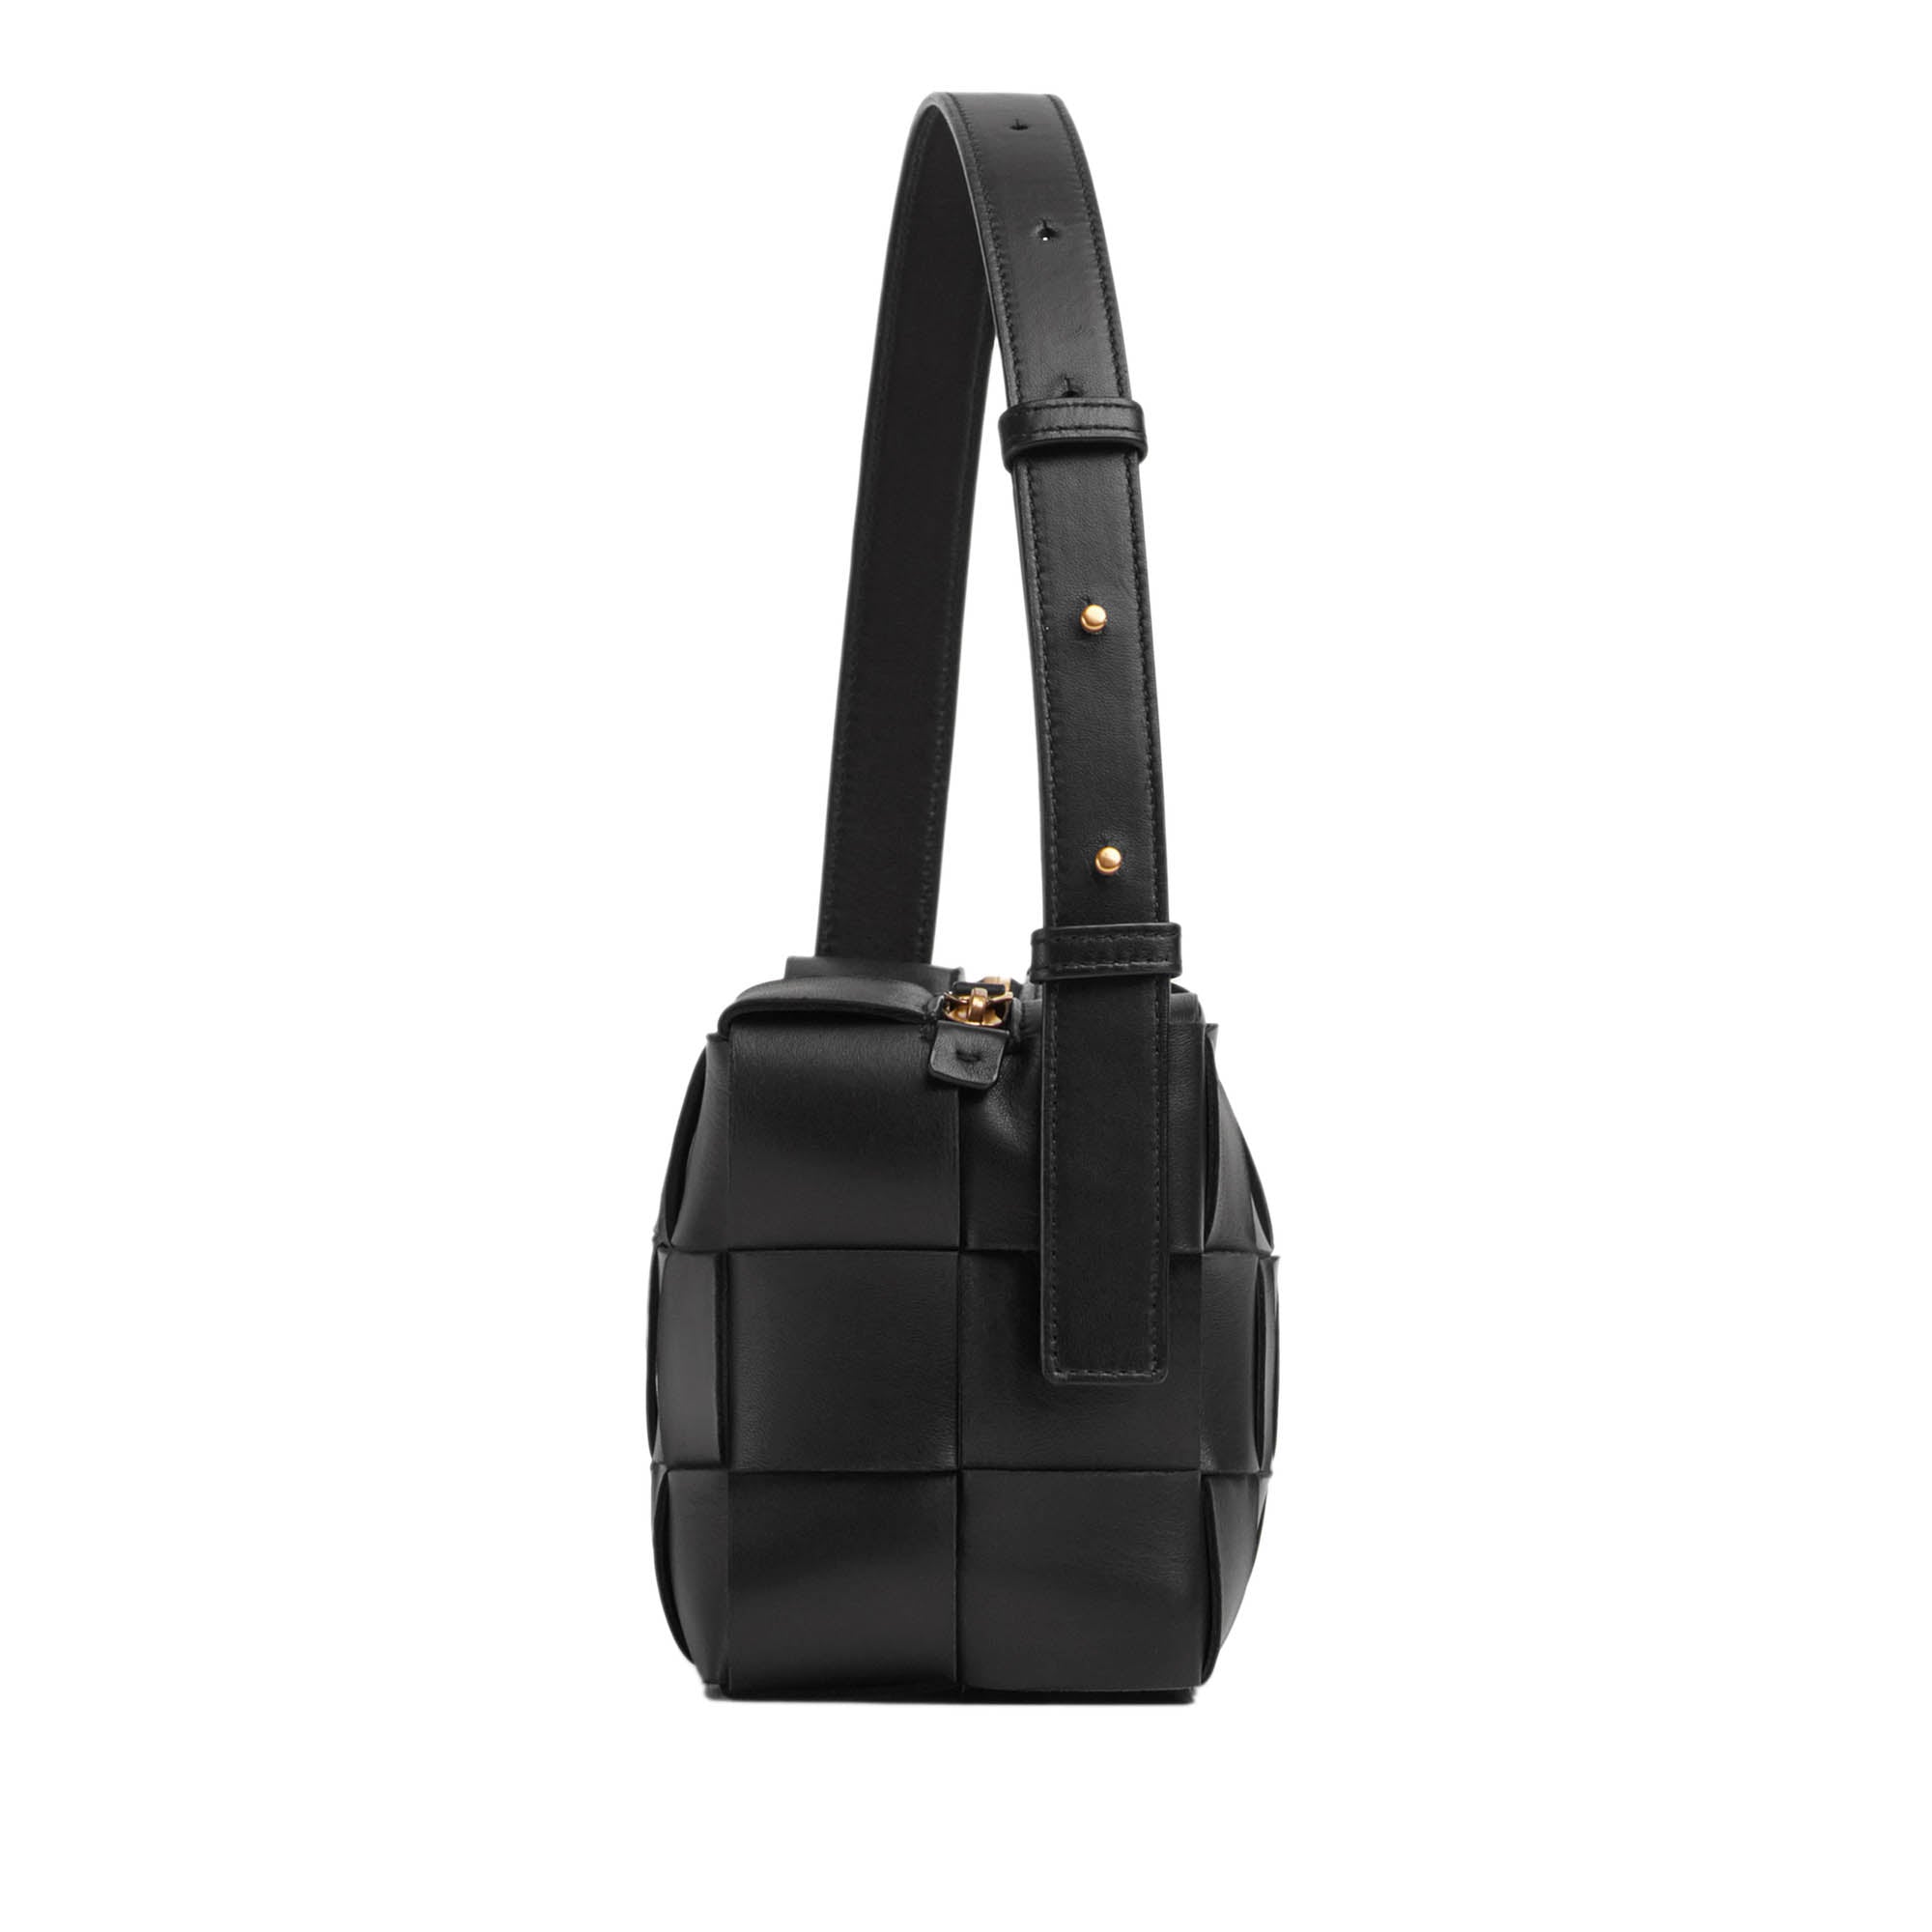 Bottega Veneta Brick Cassette - Shoulder bag for Woman - Green -  729166VMAY1-3579